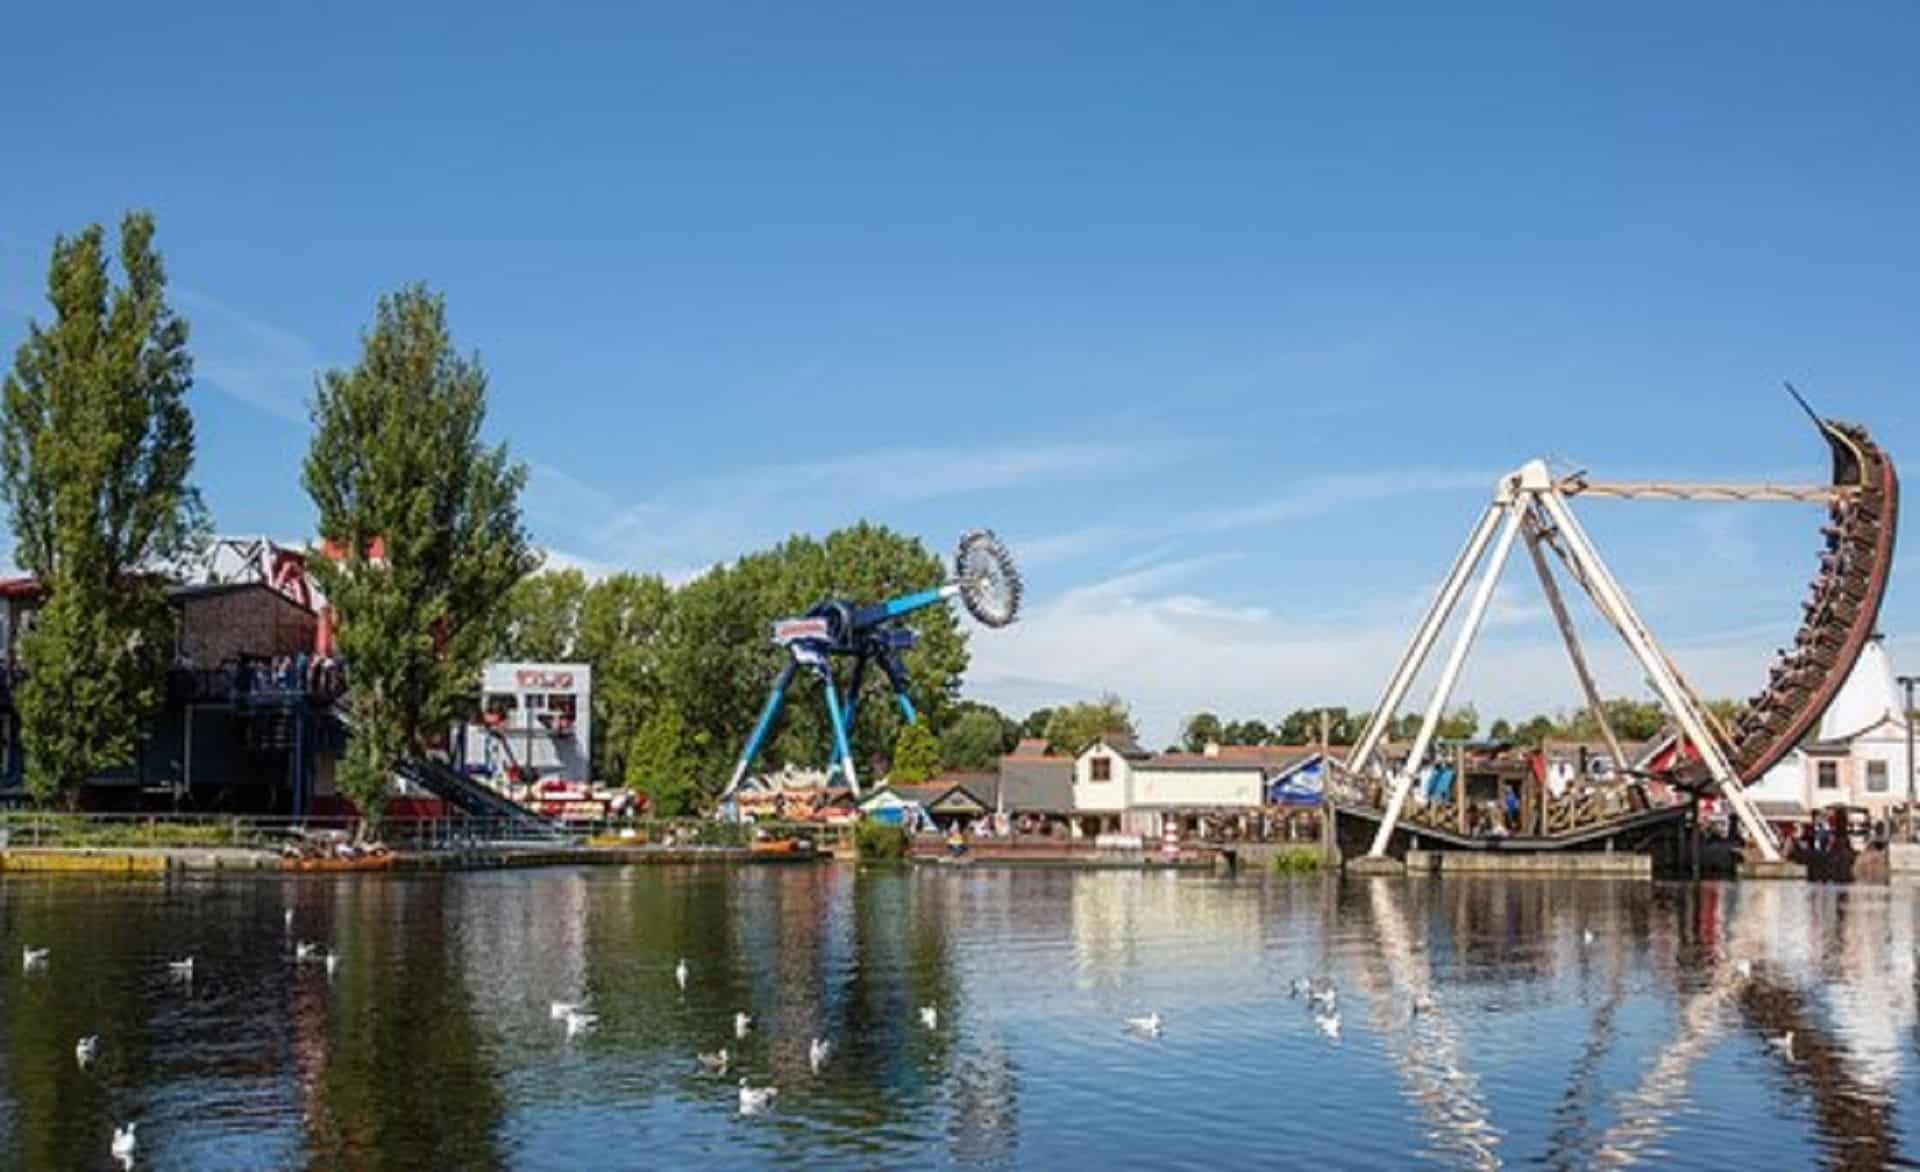 Drayton Manor Theme Park in UK